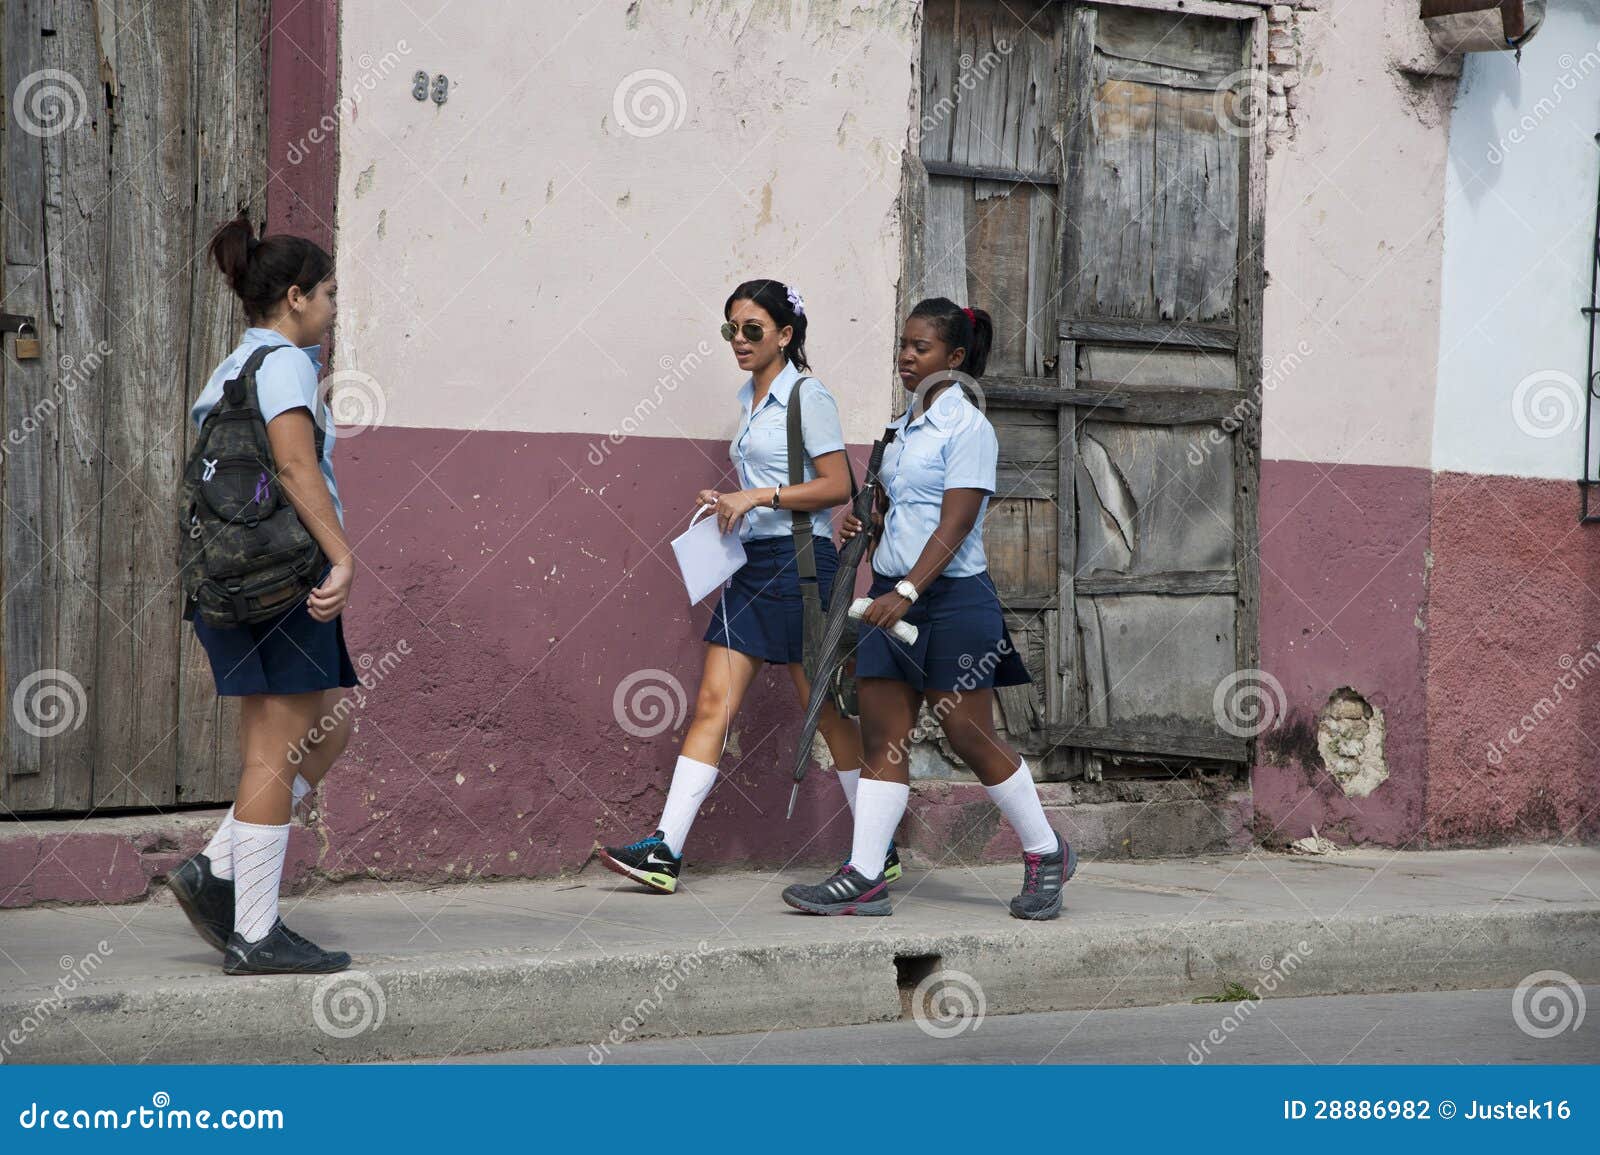 Colejialas cubanas